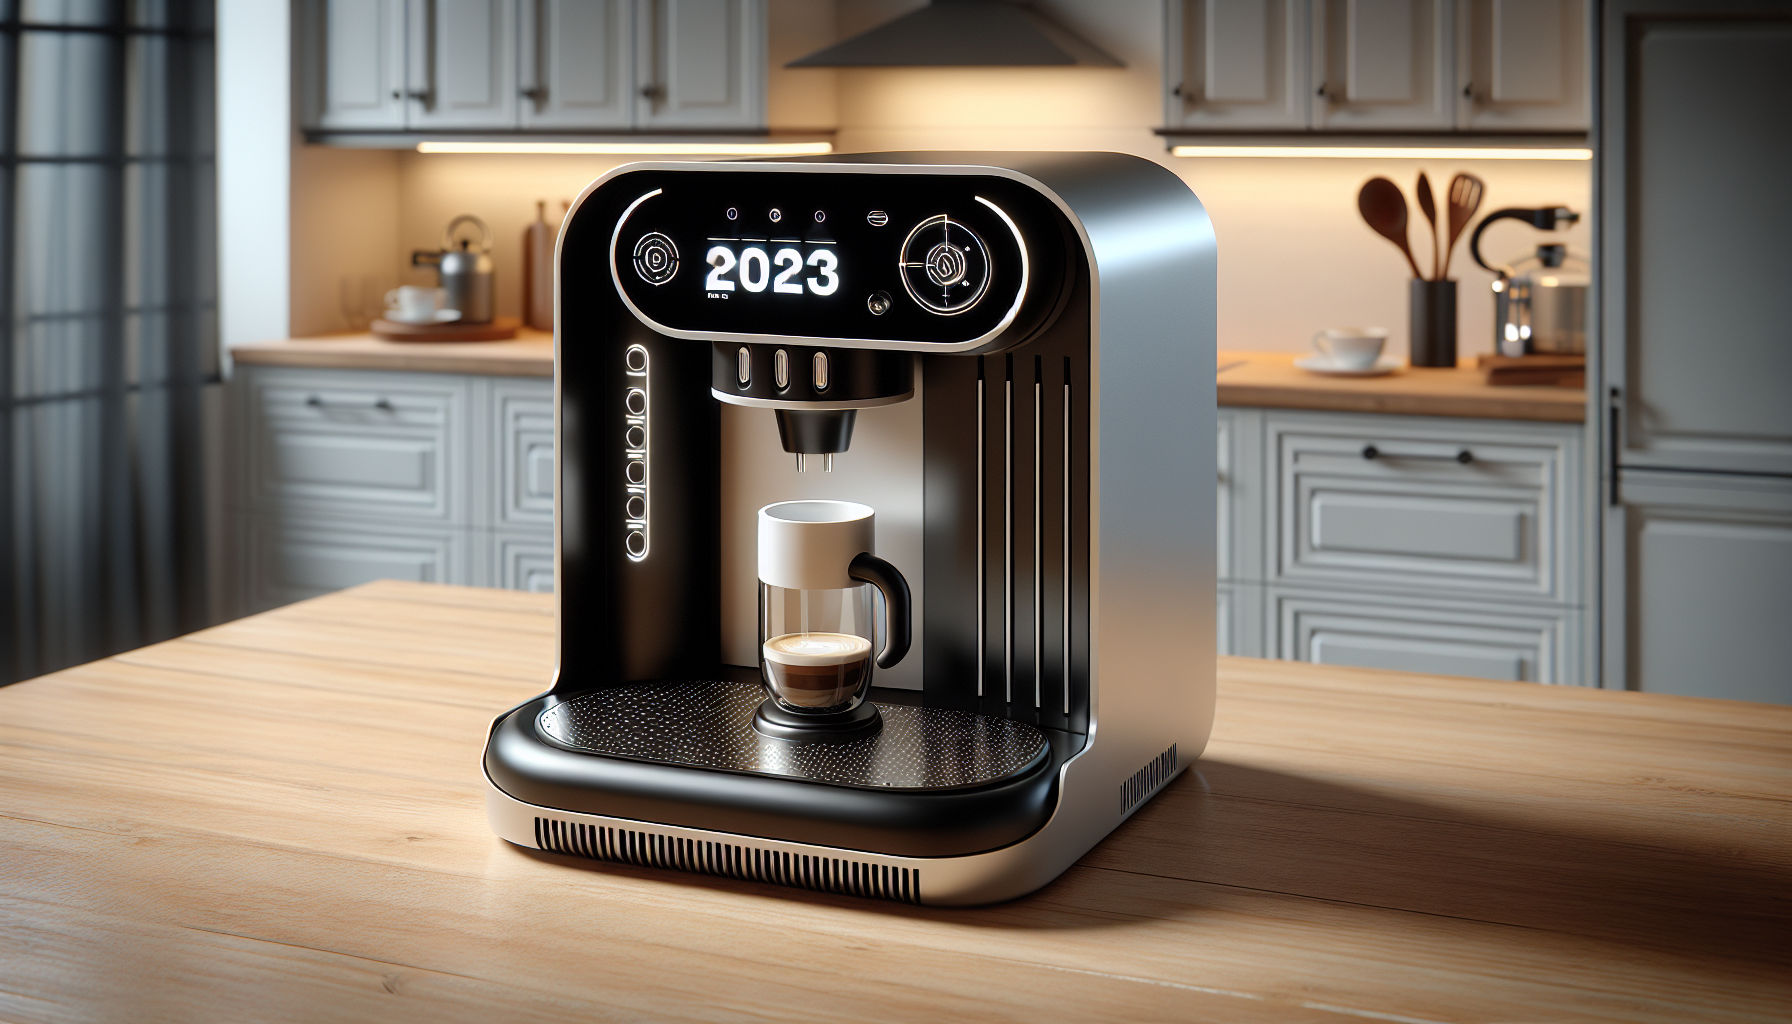 What Is The New Nespresso Machine 2023?